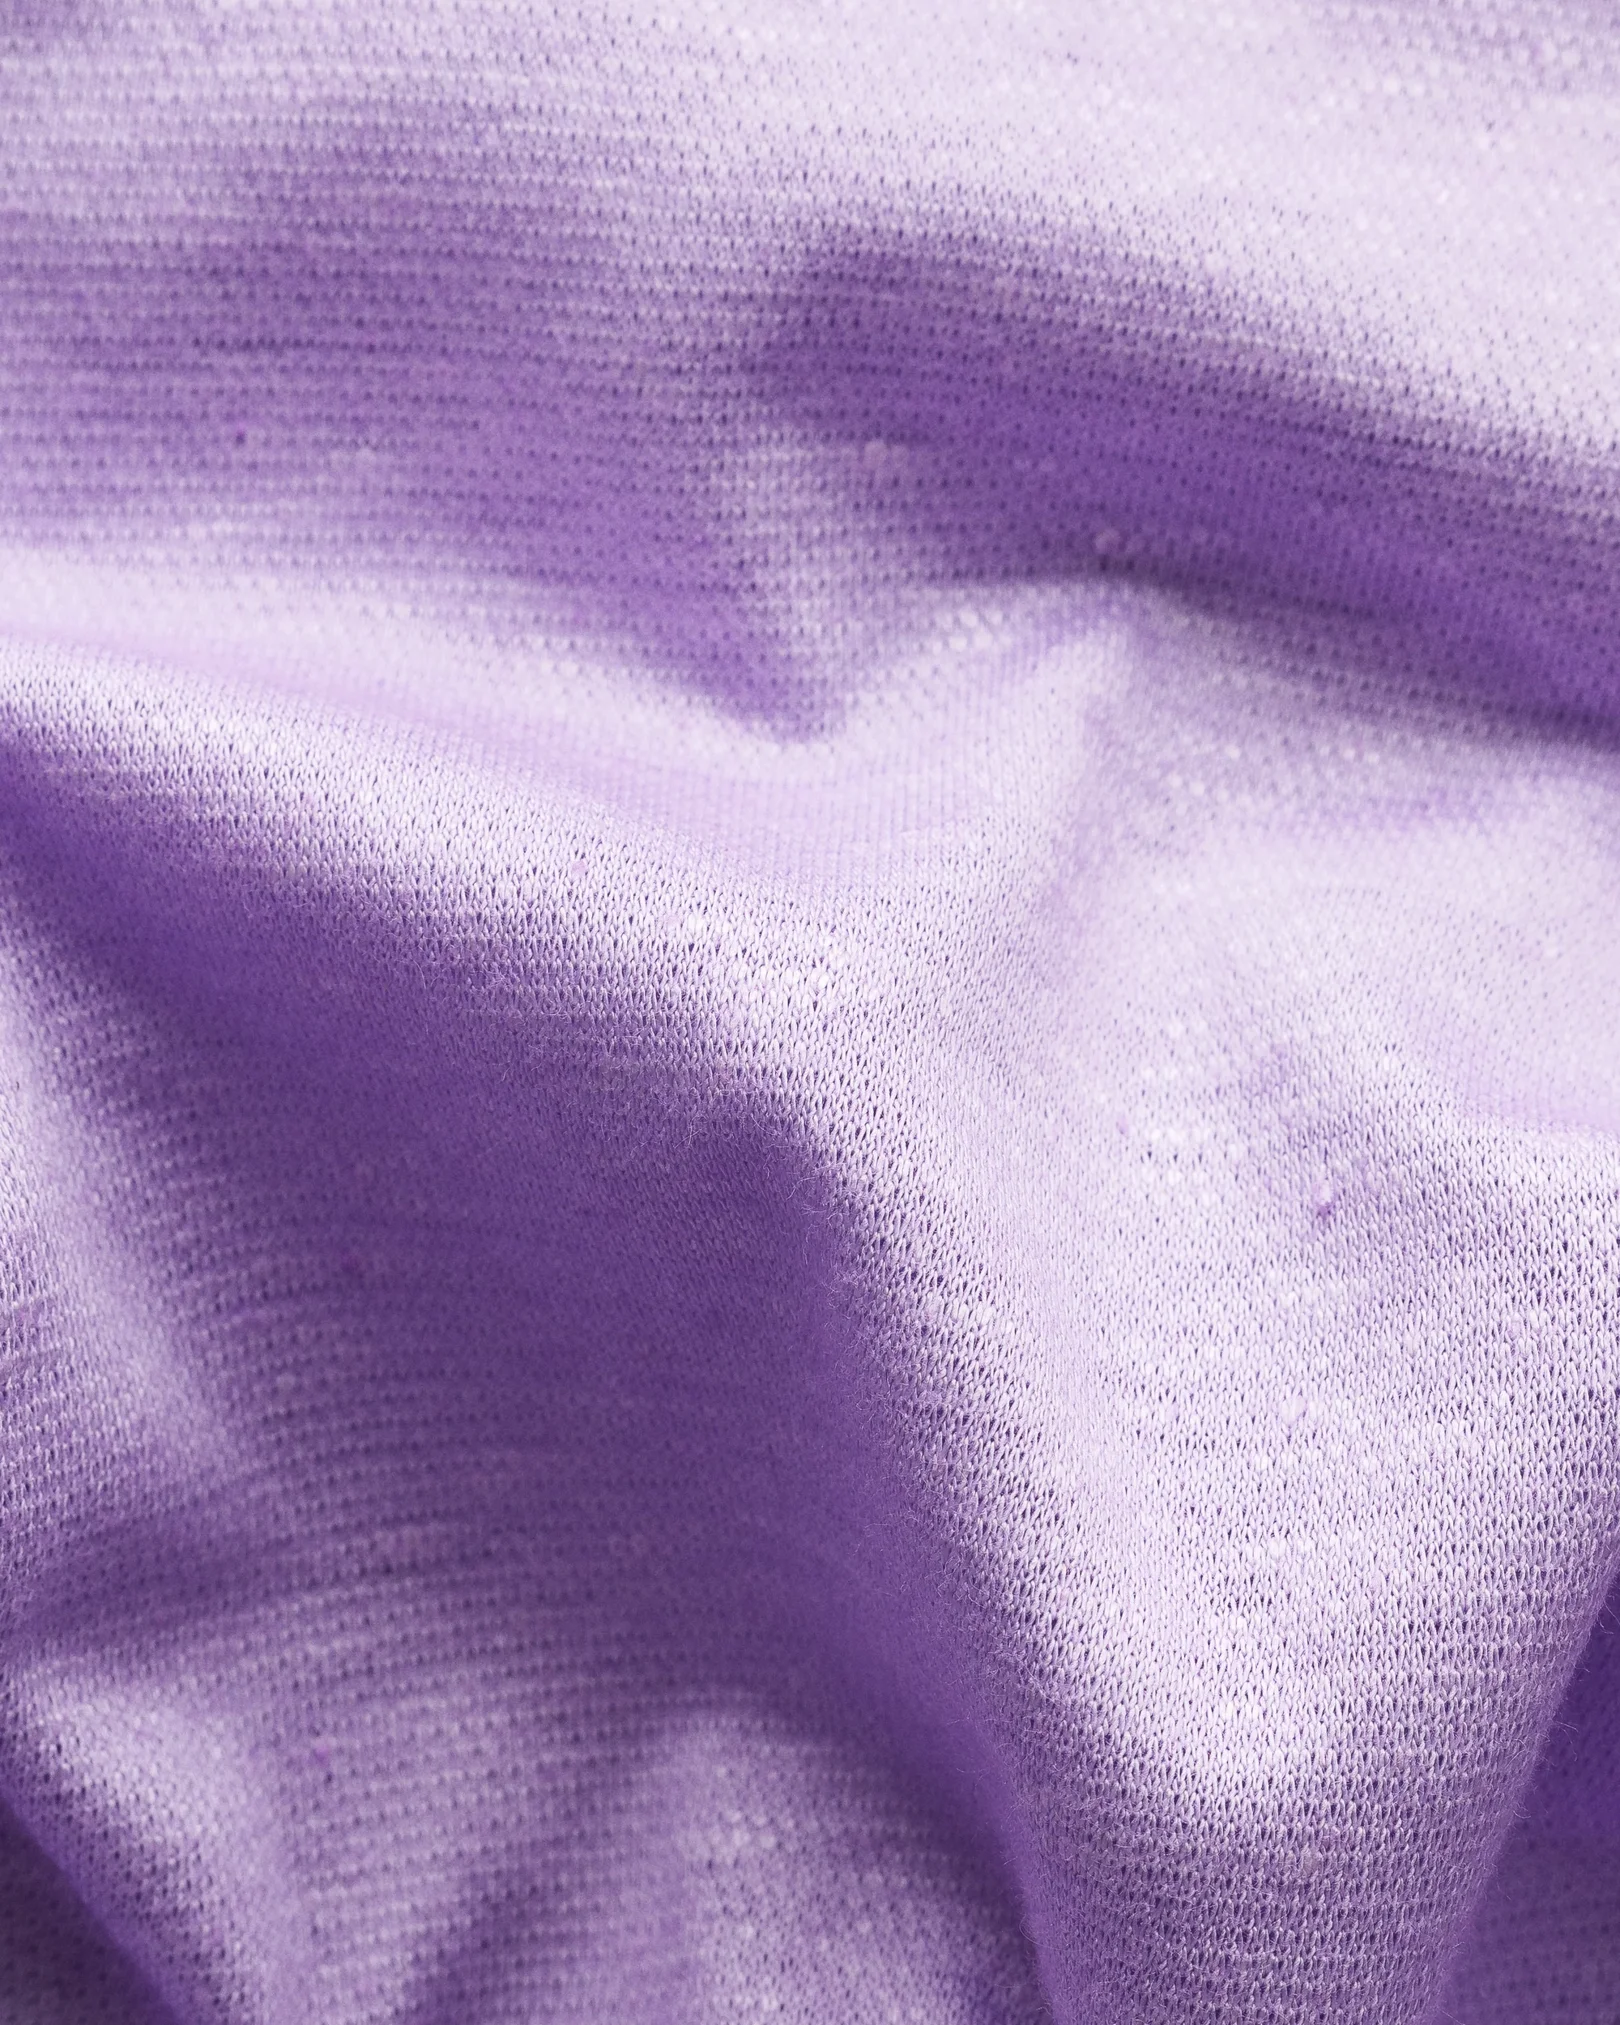 Eton - light purple pique